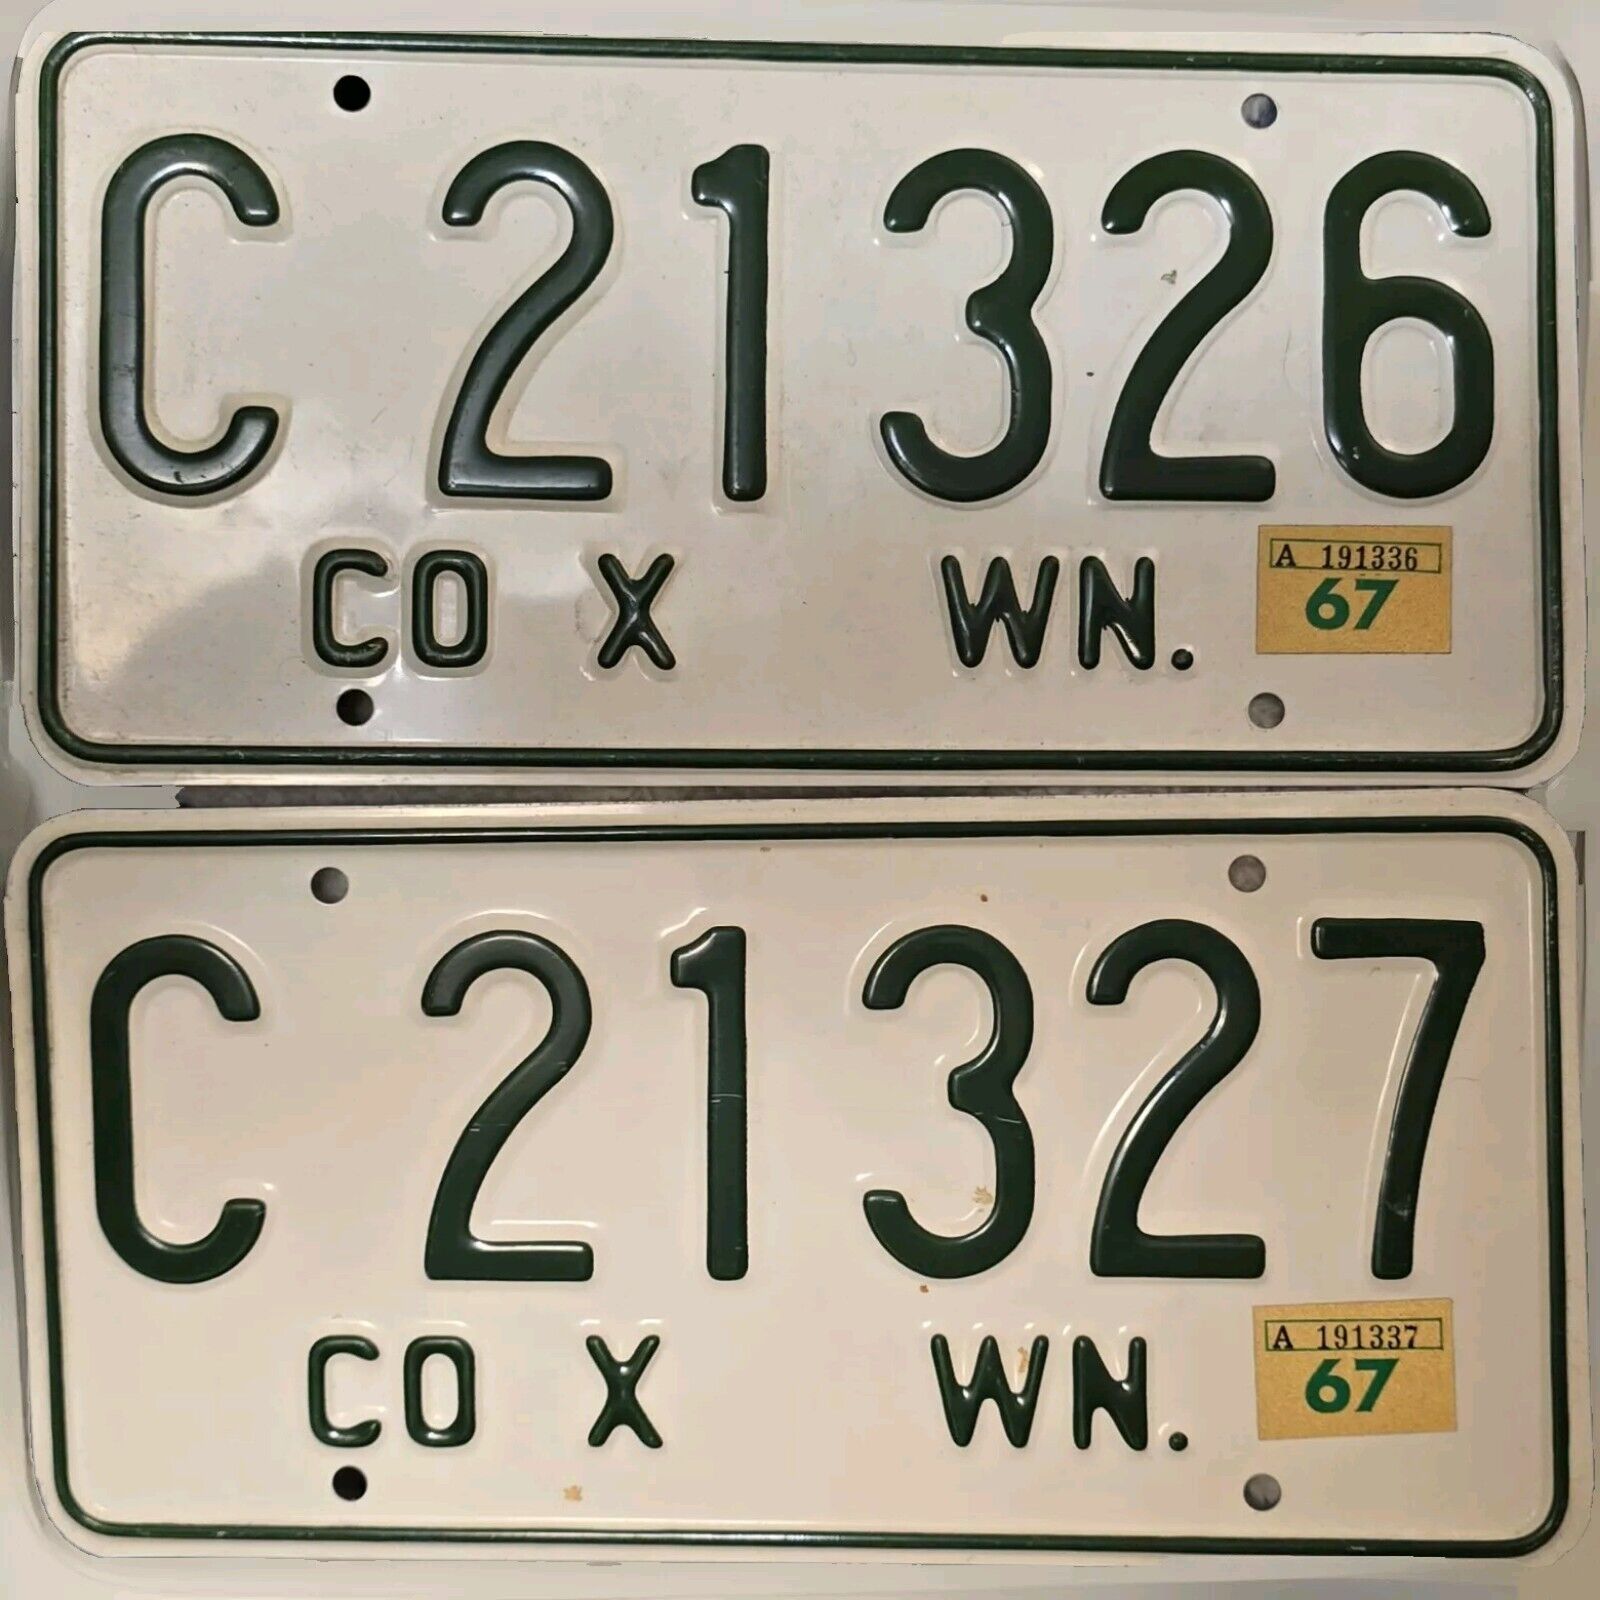 Vintage 1967 Washington License Plate Pair CONSECUTIVE NUMBERS Origina Paint 